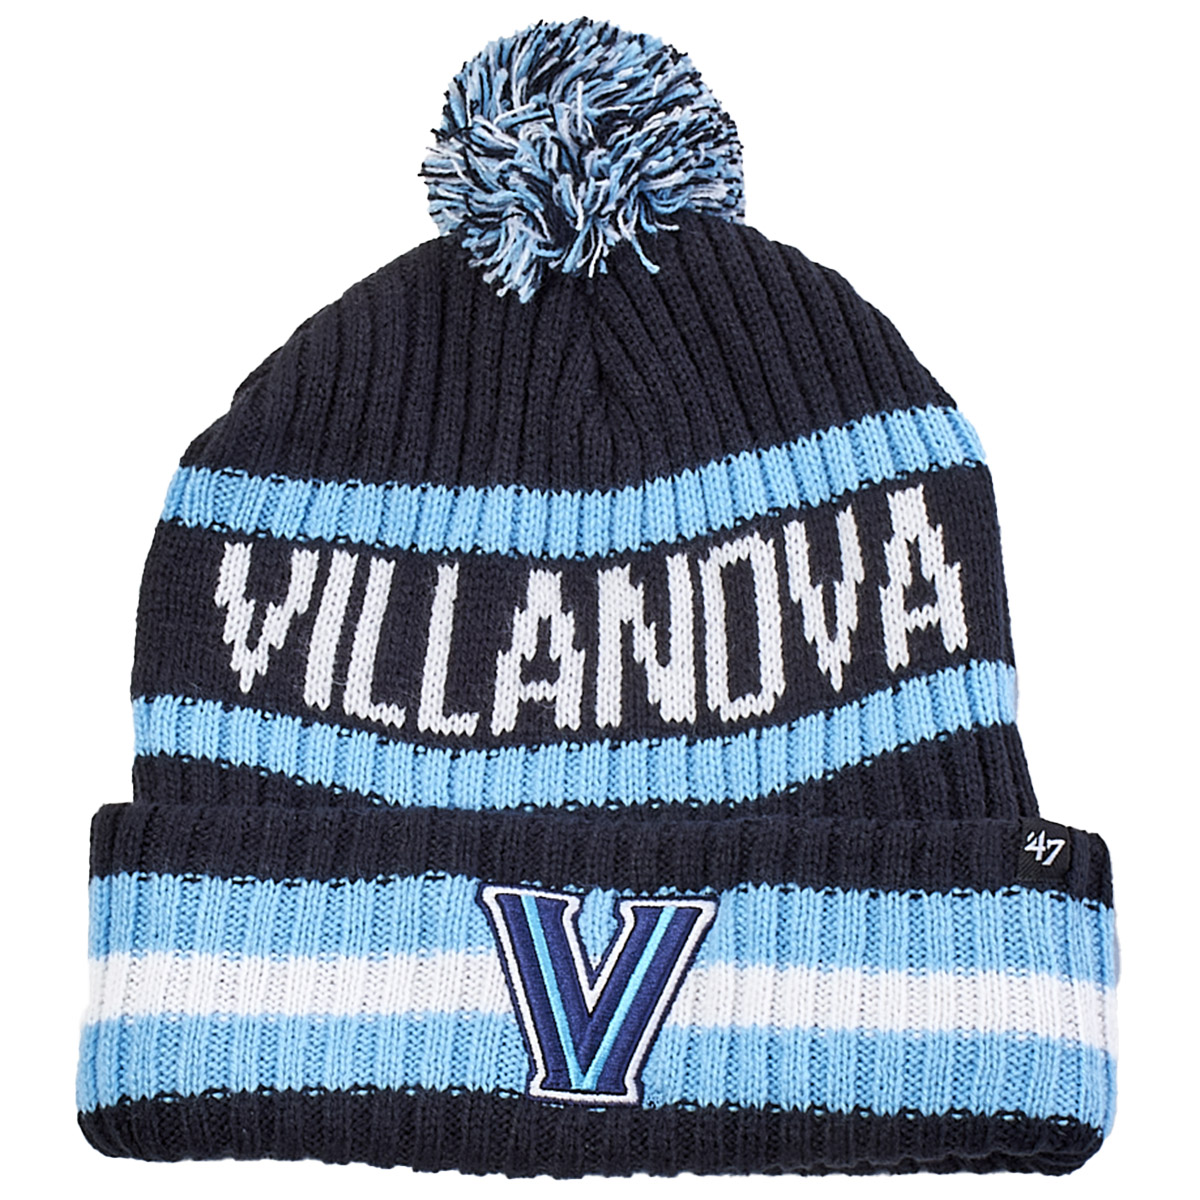 Mens '47 Brand Villanova Wildcats Knit Hat W/ Pom